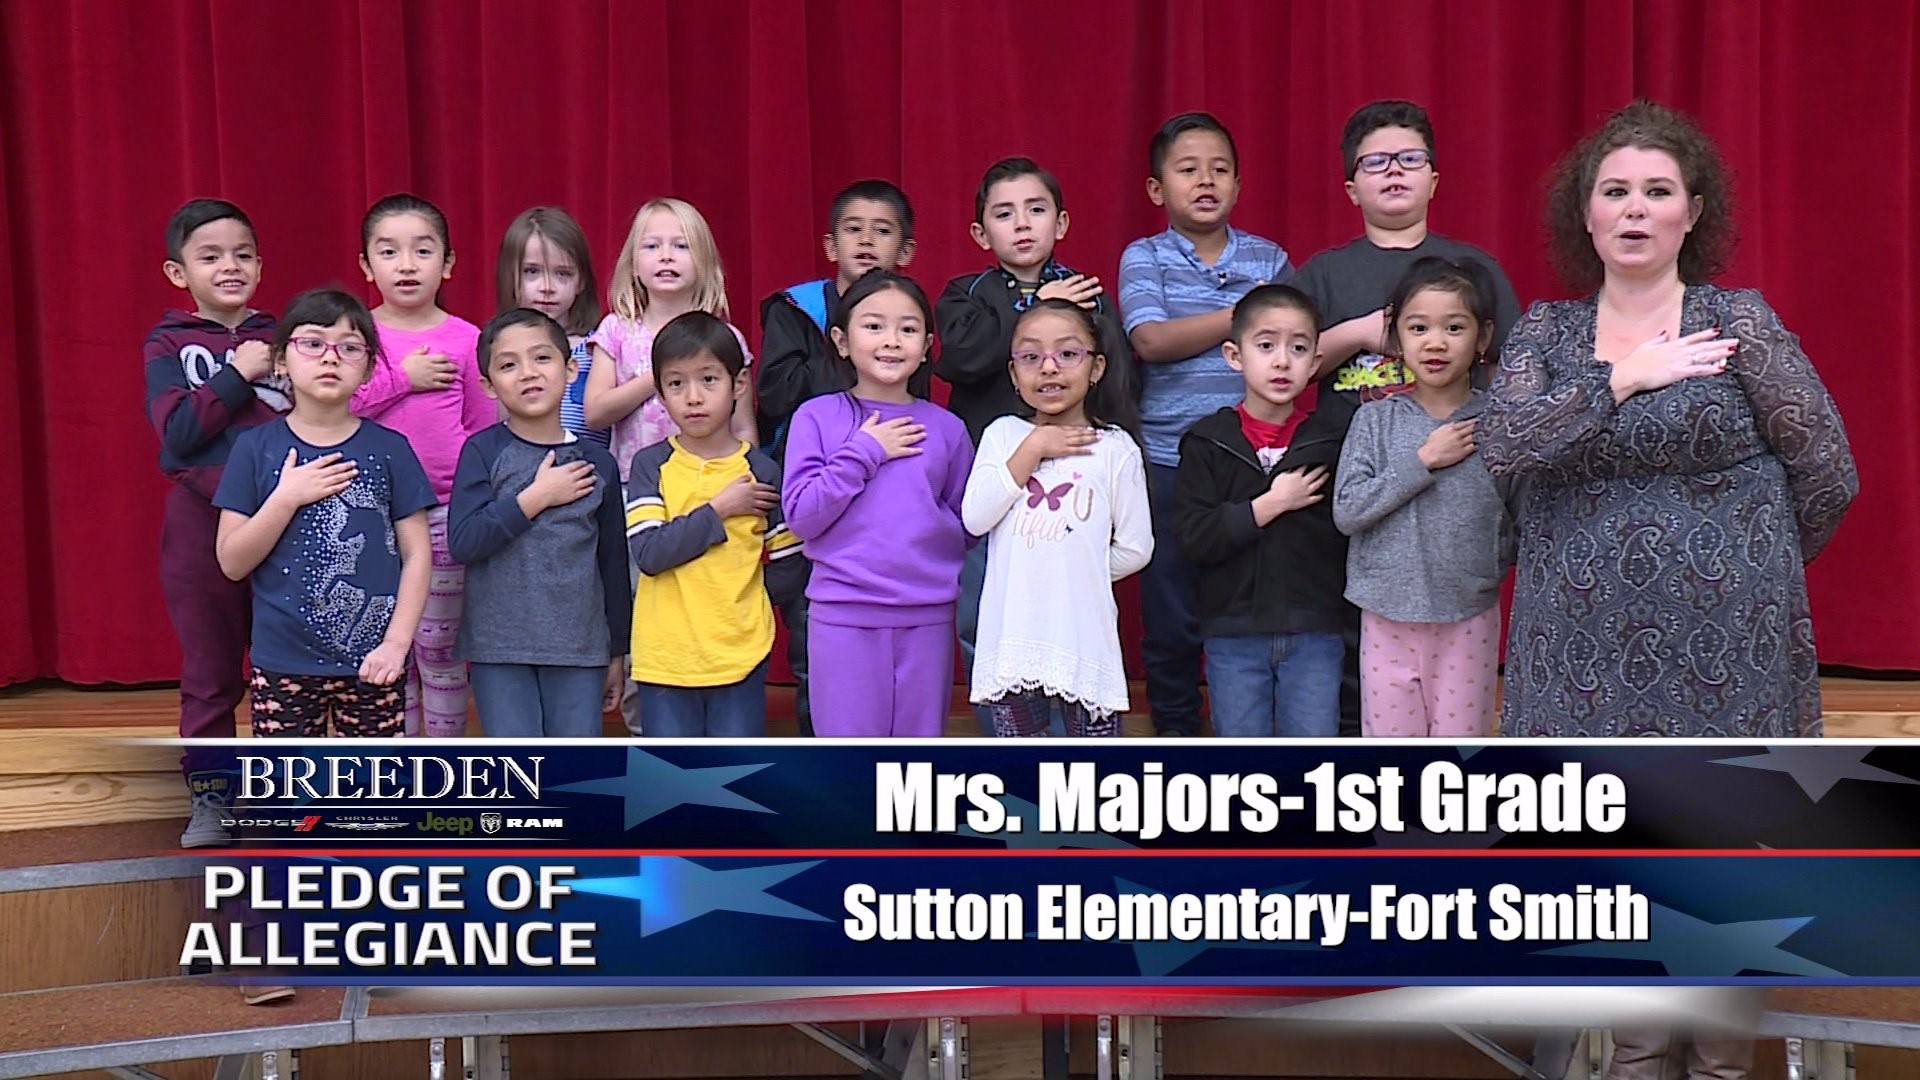 Mrs. Majors  1st Grade Sutton Elementary  Fort Smith